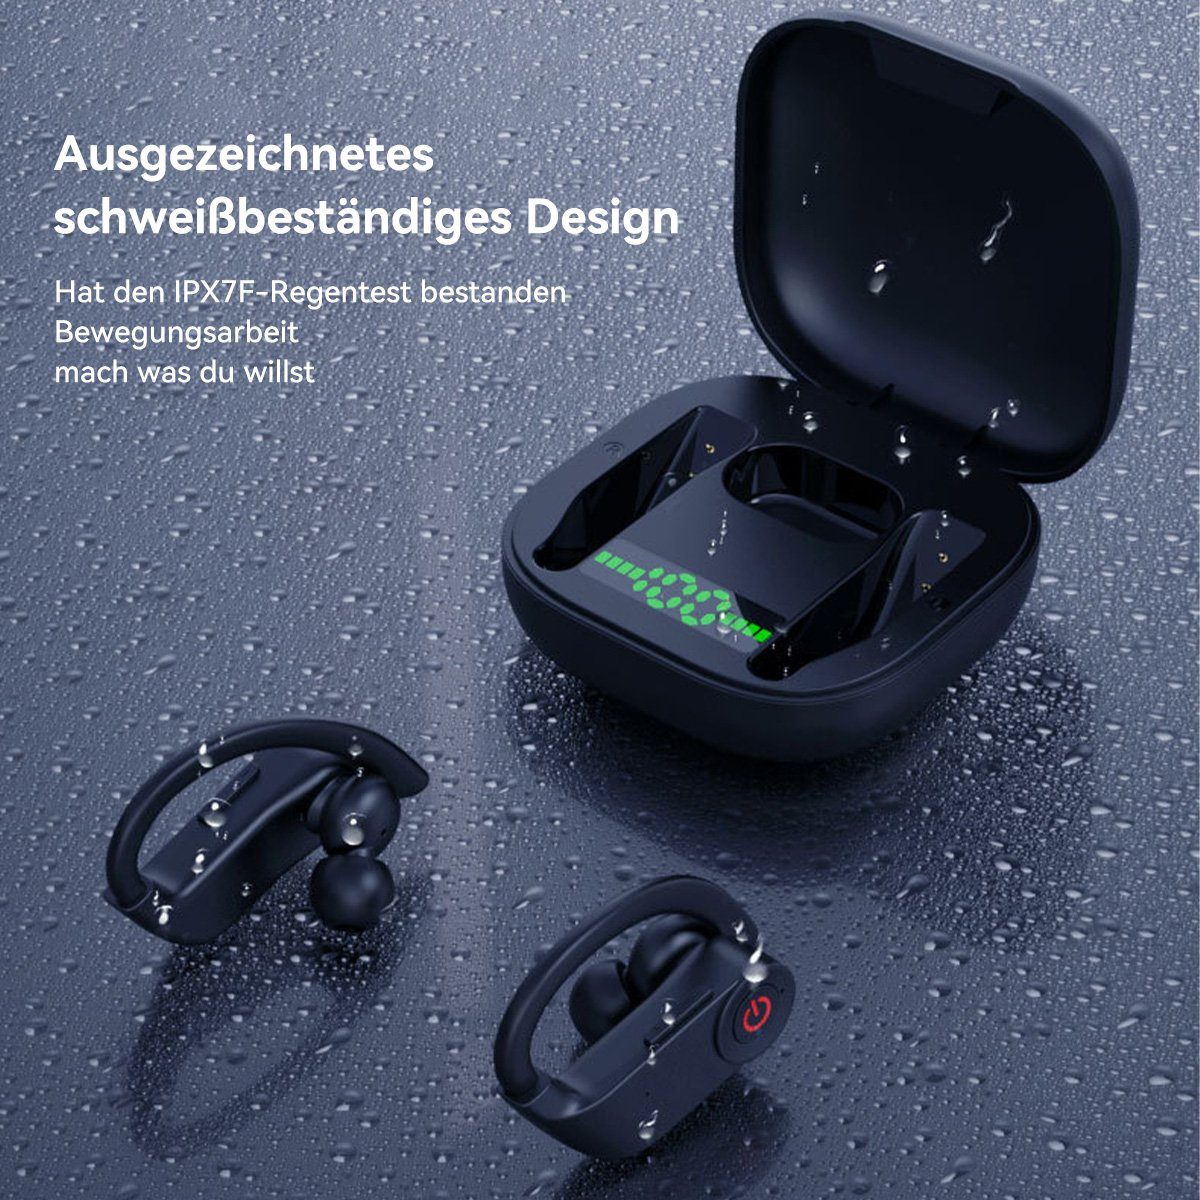 Noise Kopfhörer, Welikera Bluetooth-Kopfhörer Cancelling 5.3 IPX7 bluetooth